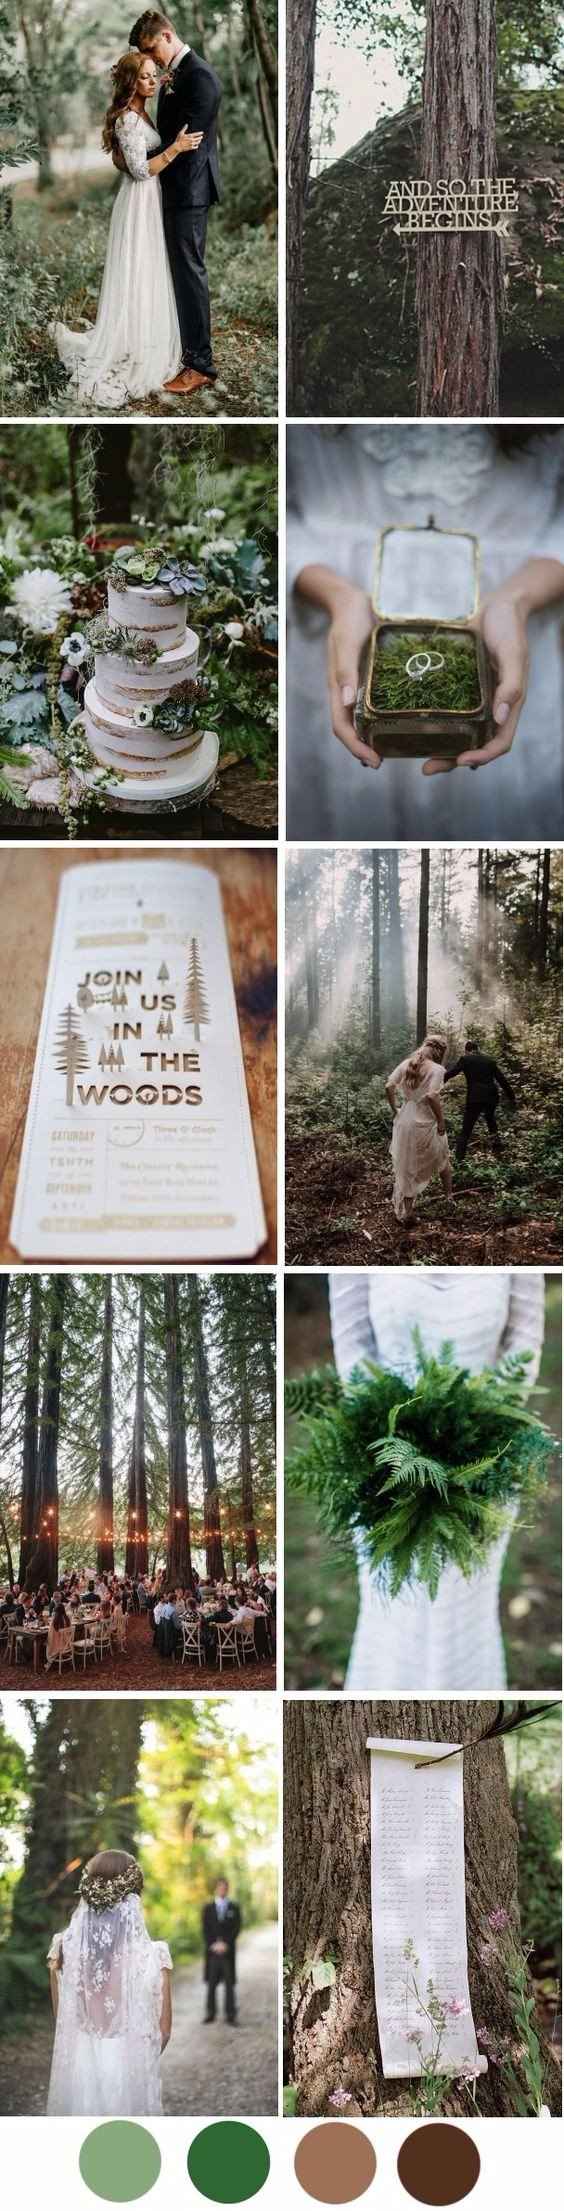 An Elegant, Enchanted Forest Wedding Theme Palette